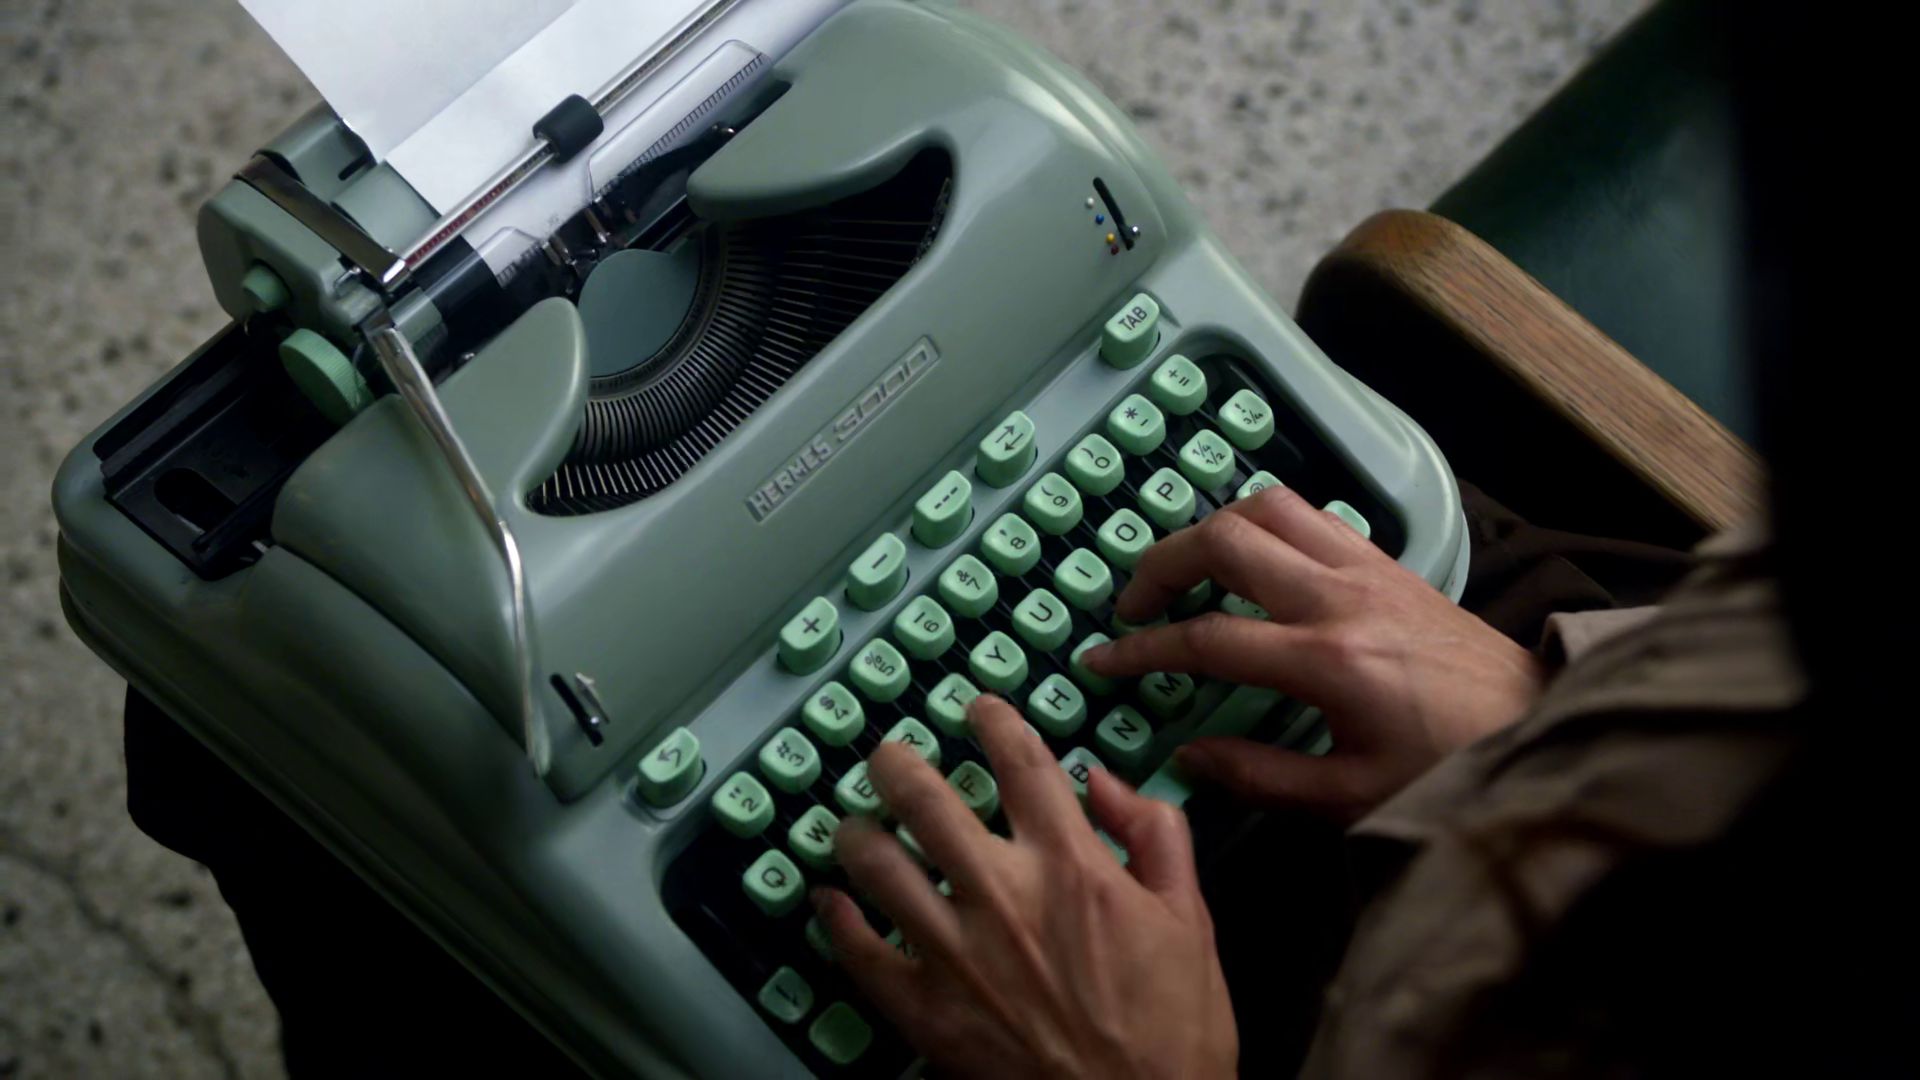 Item of interest: Hermes 3000 typewriter